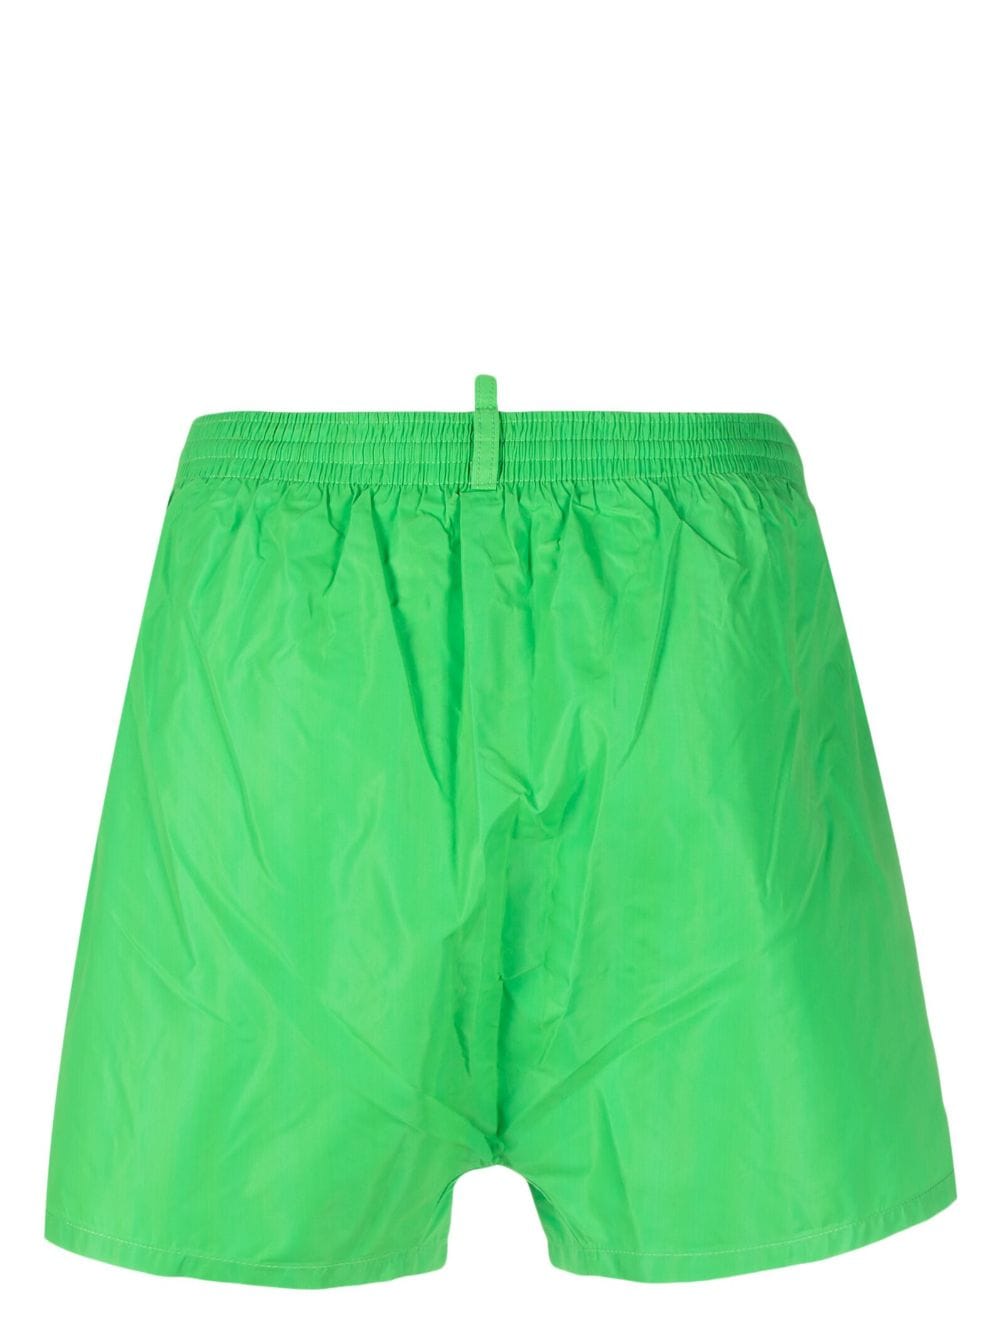 Dsquared2 logo-print swim shorts - Groen